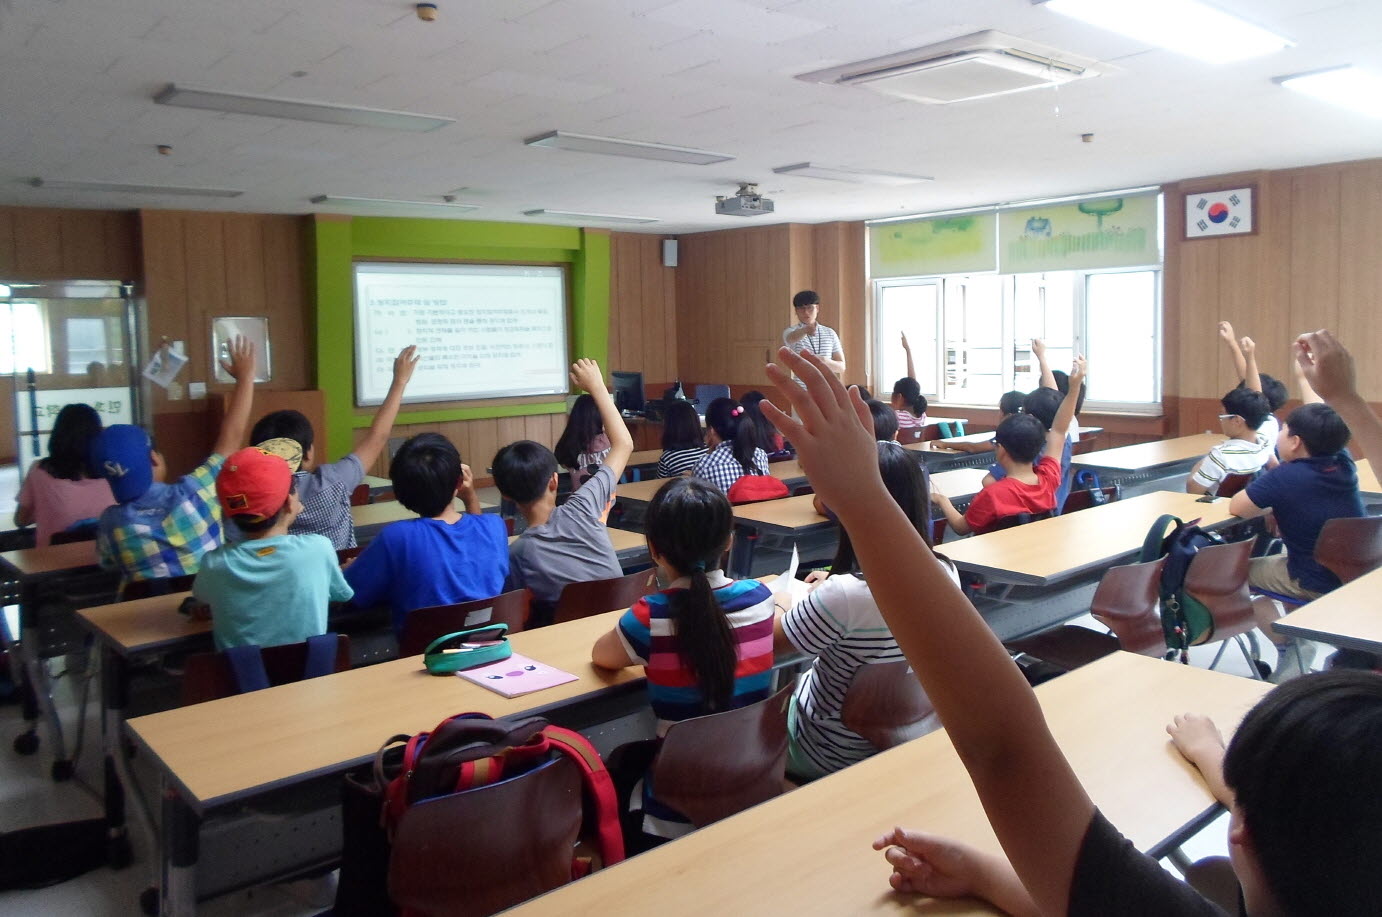 PPT를 활용한 이론강의시 학생들이 적극적으로 수업에 참여하는 모습.